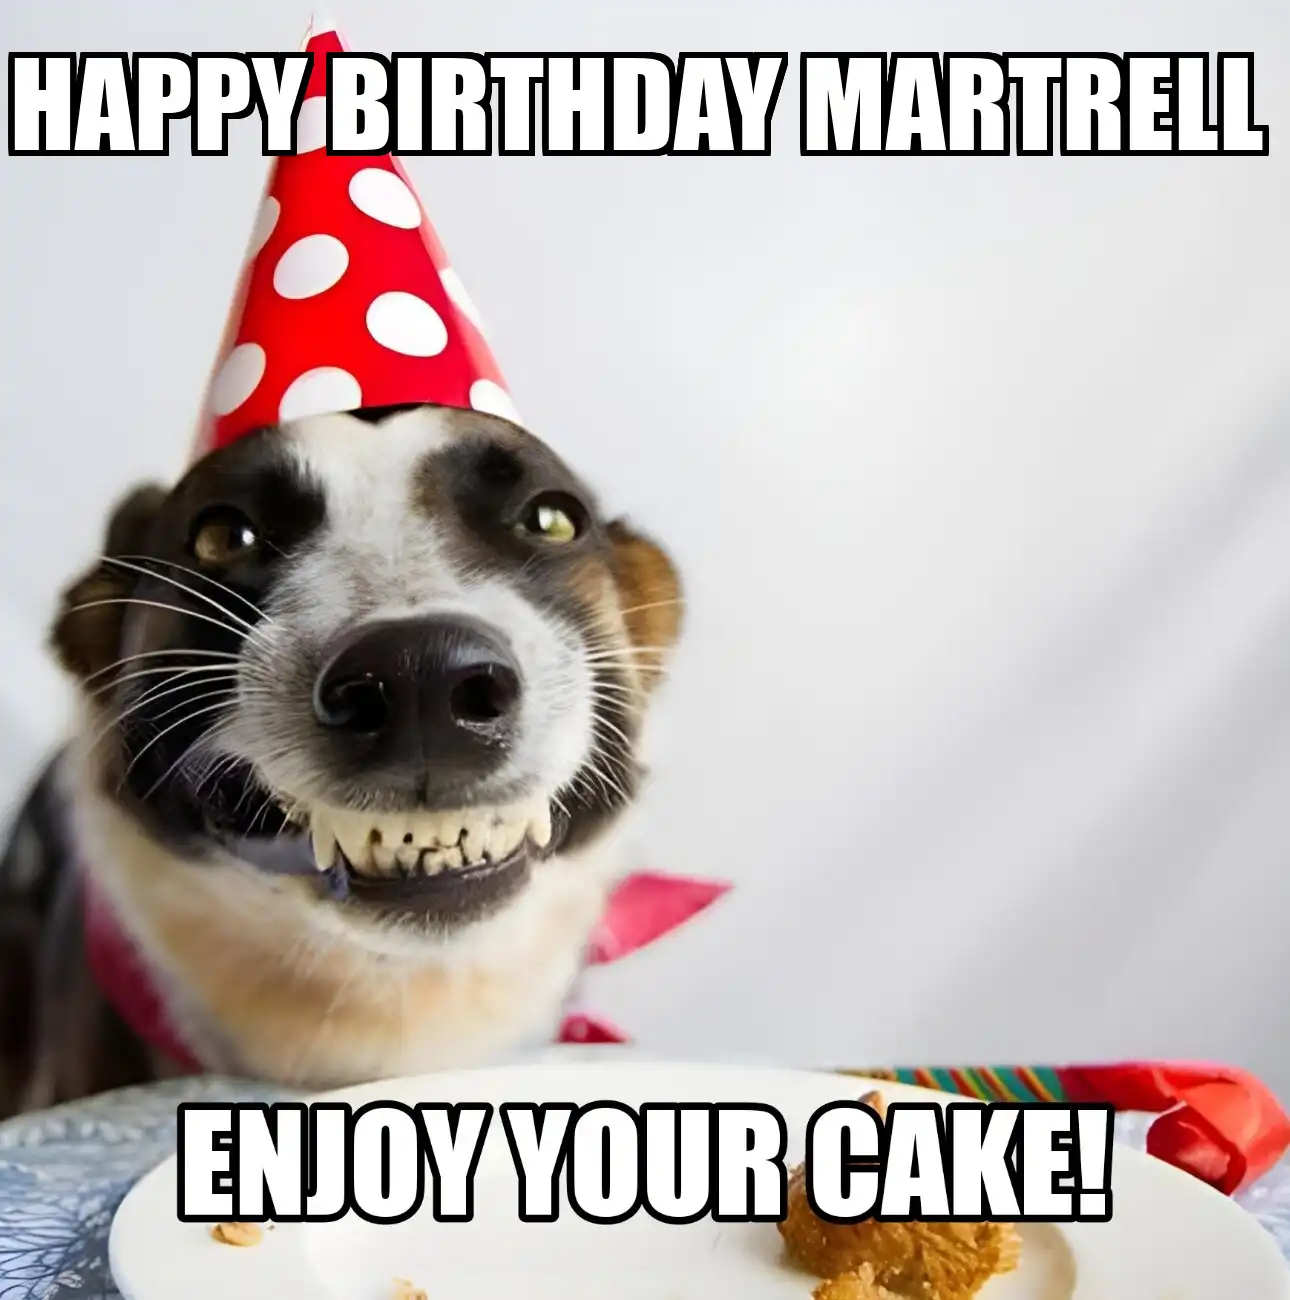 Happy Birthday Martrell Enjoy Your Cake Dog Meme